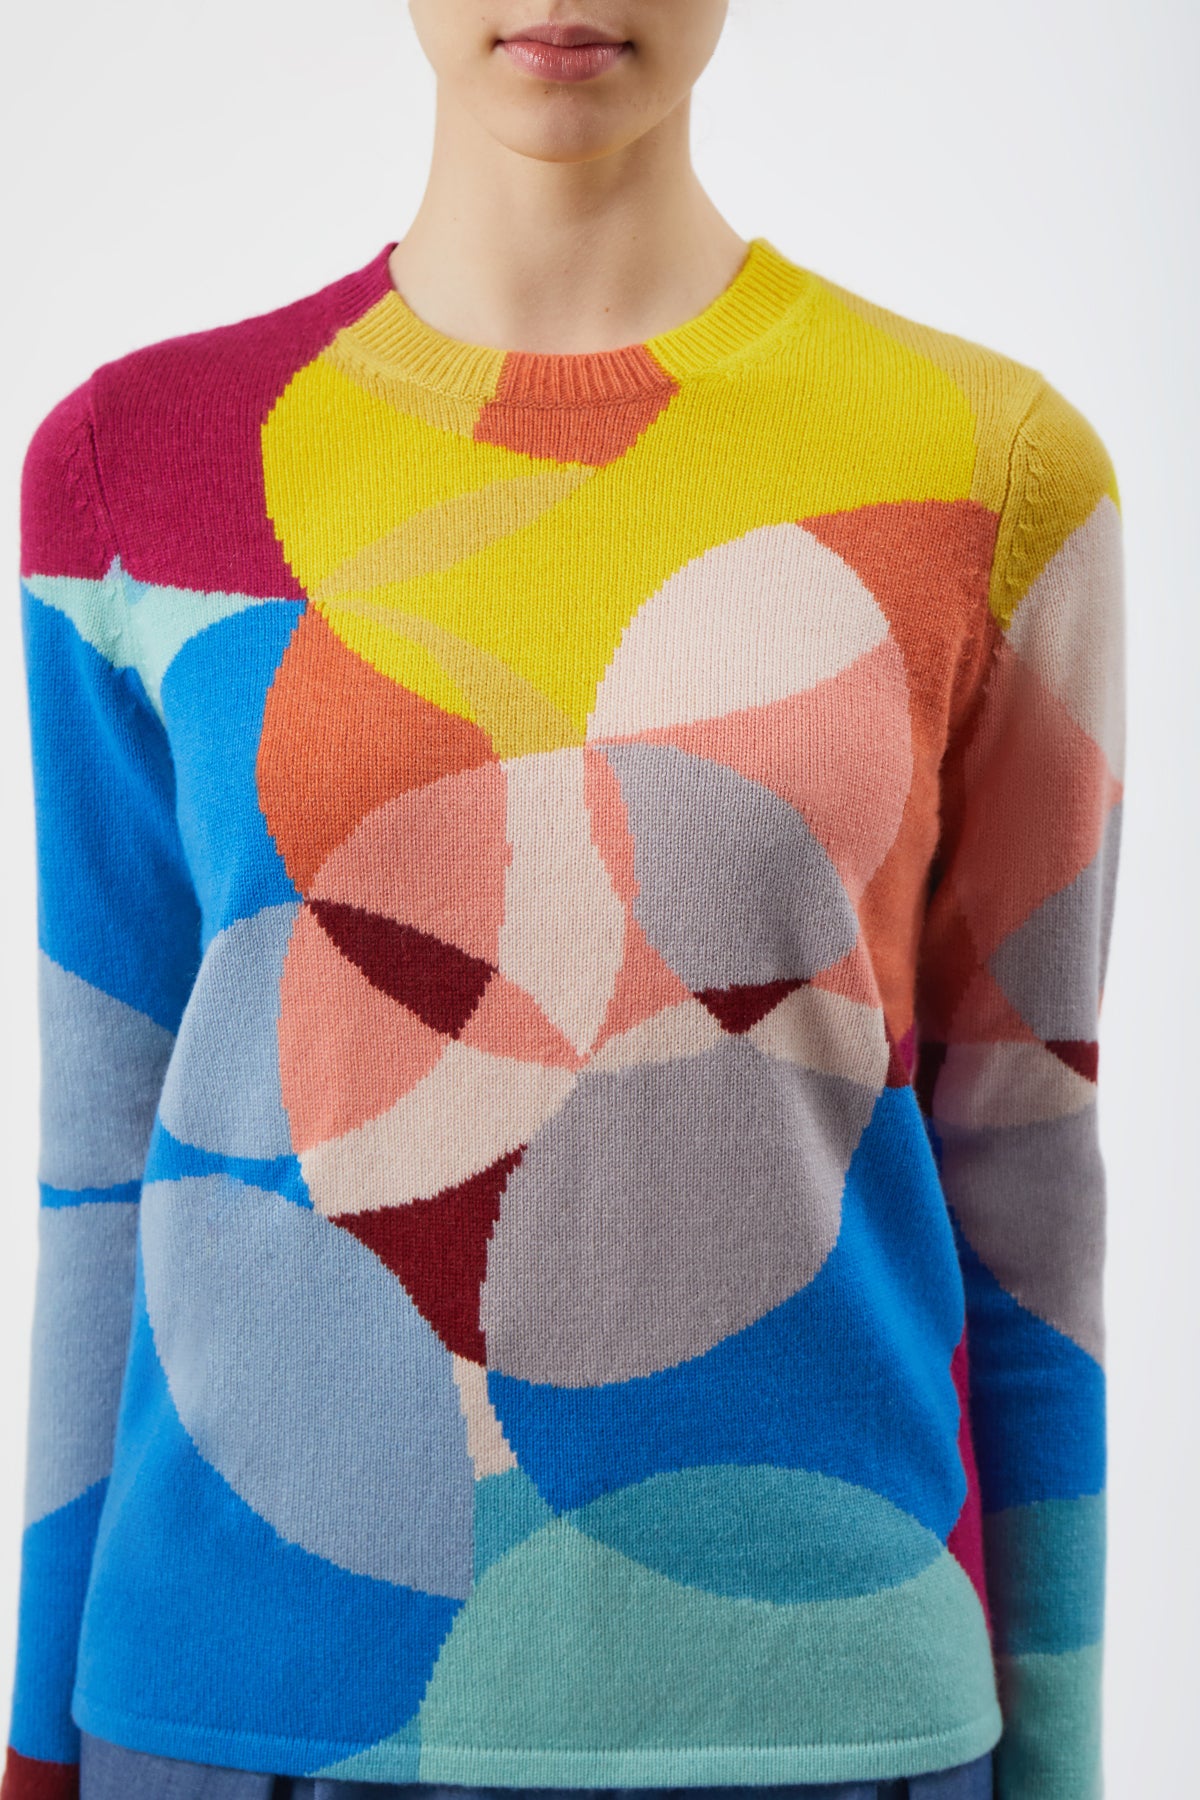 Muscovite Knit Sweater in Multi Cashmere